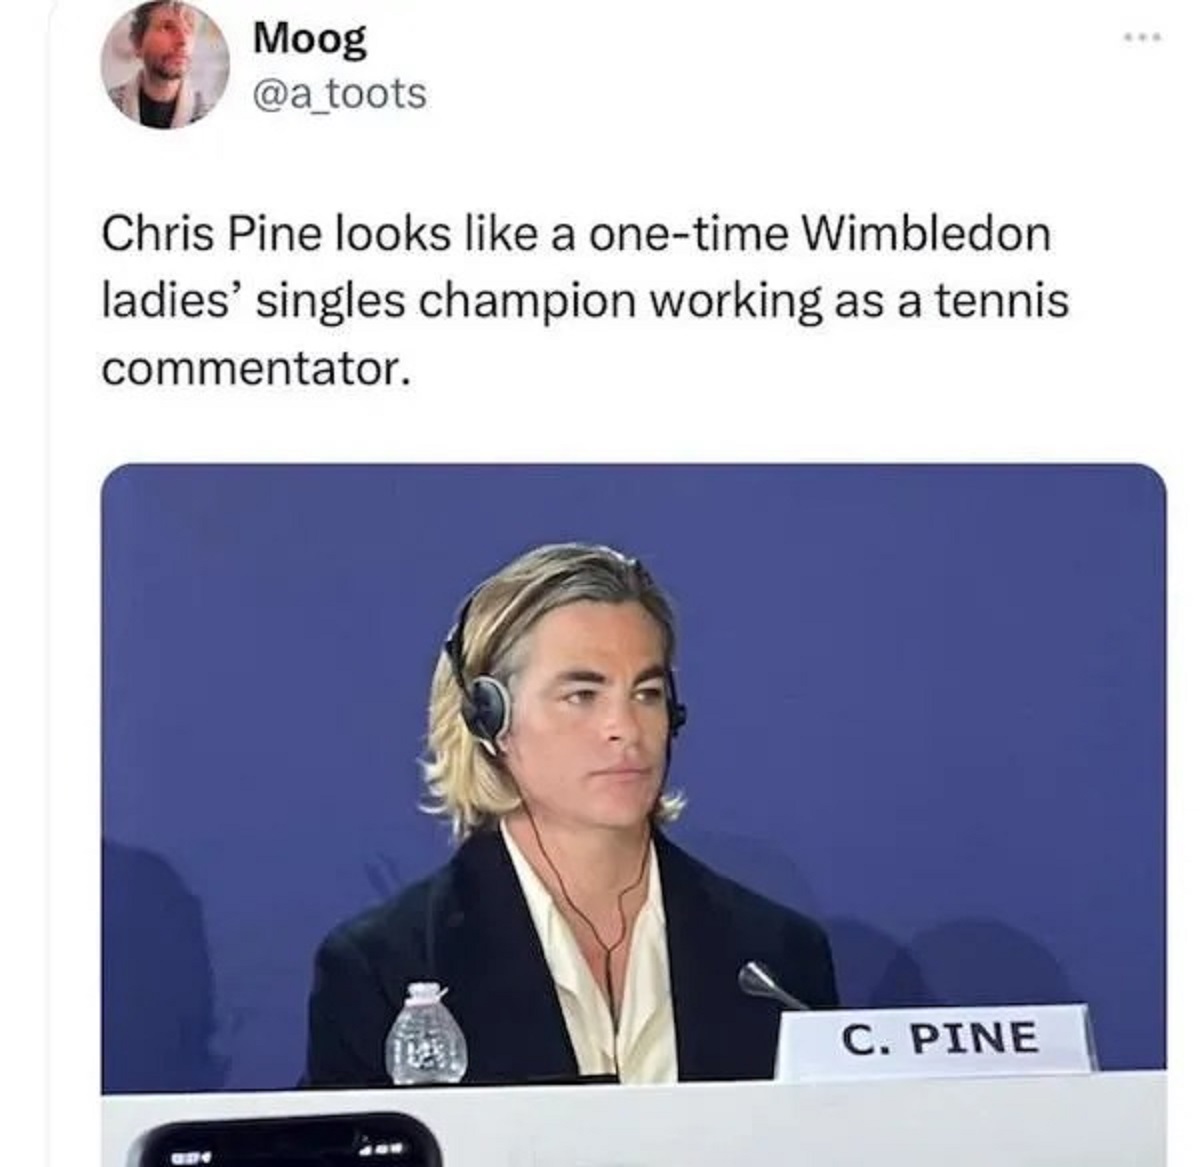 chris pine nico rosberg - Moog Chris Pine looks a onetime Wimbledon ladies' singles champion working as a tennis commentator. C. Pine